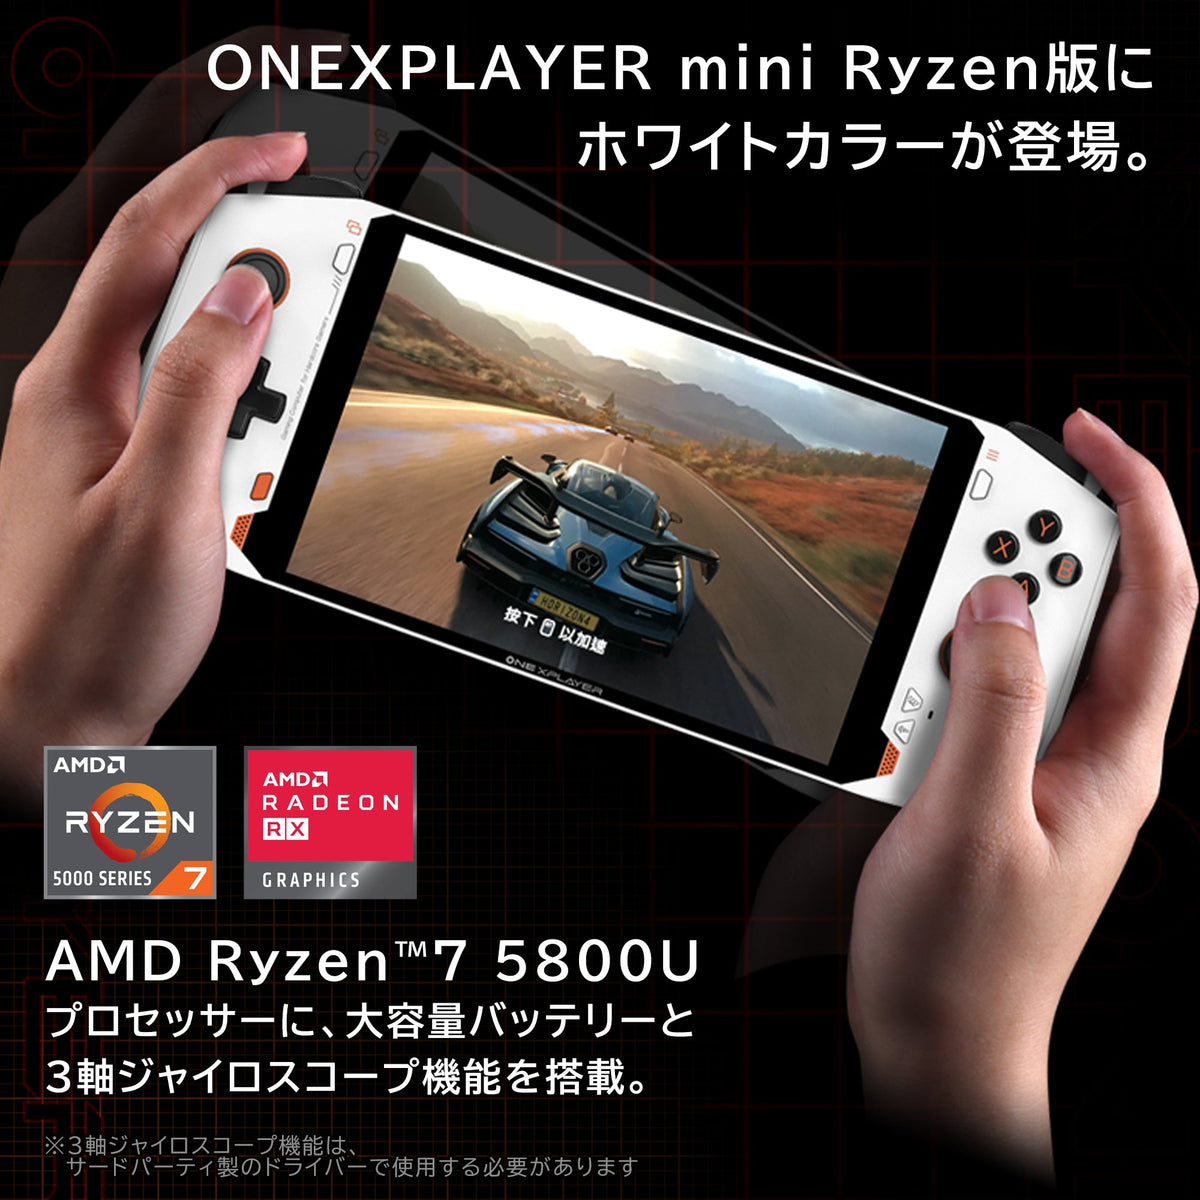 ONEXPLAYER mini FHD版 Ryzen 7 5800U エントリーパック《専用ケース